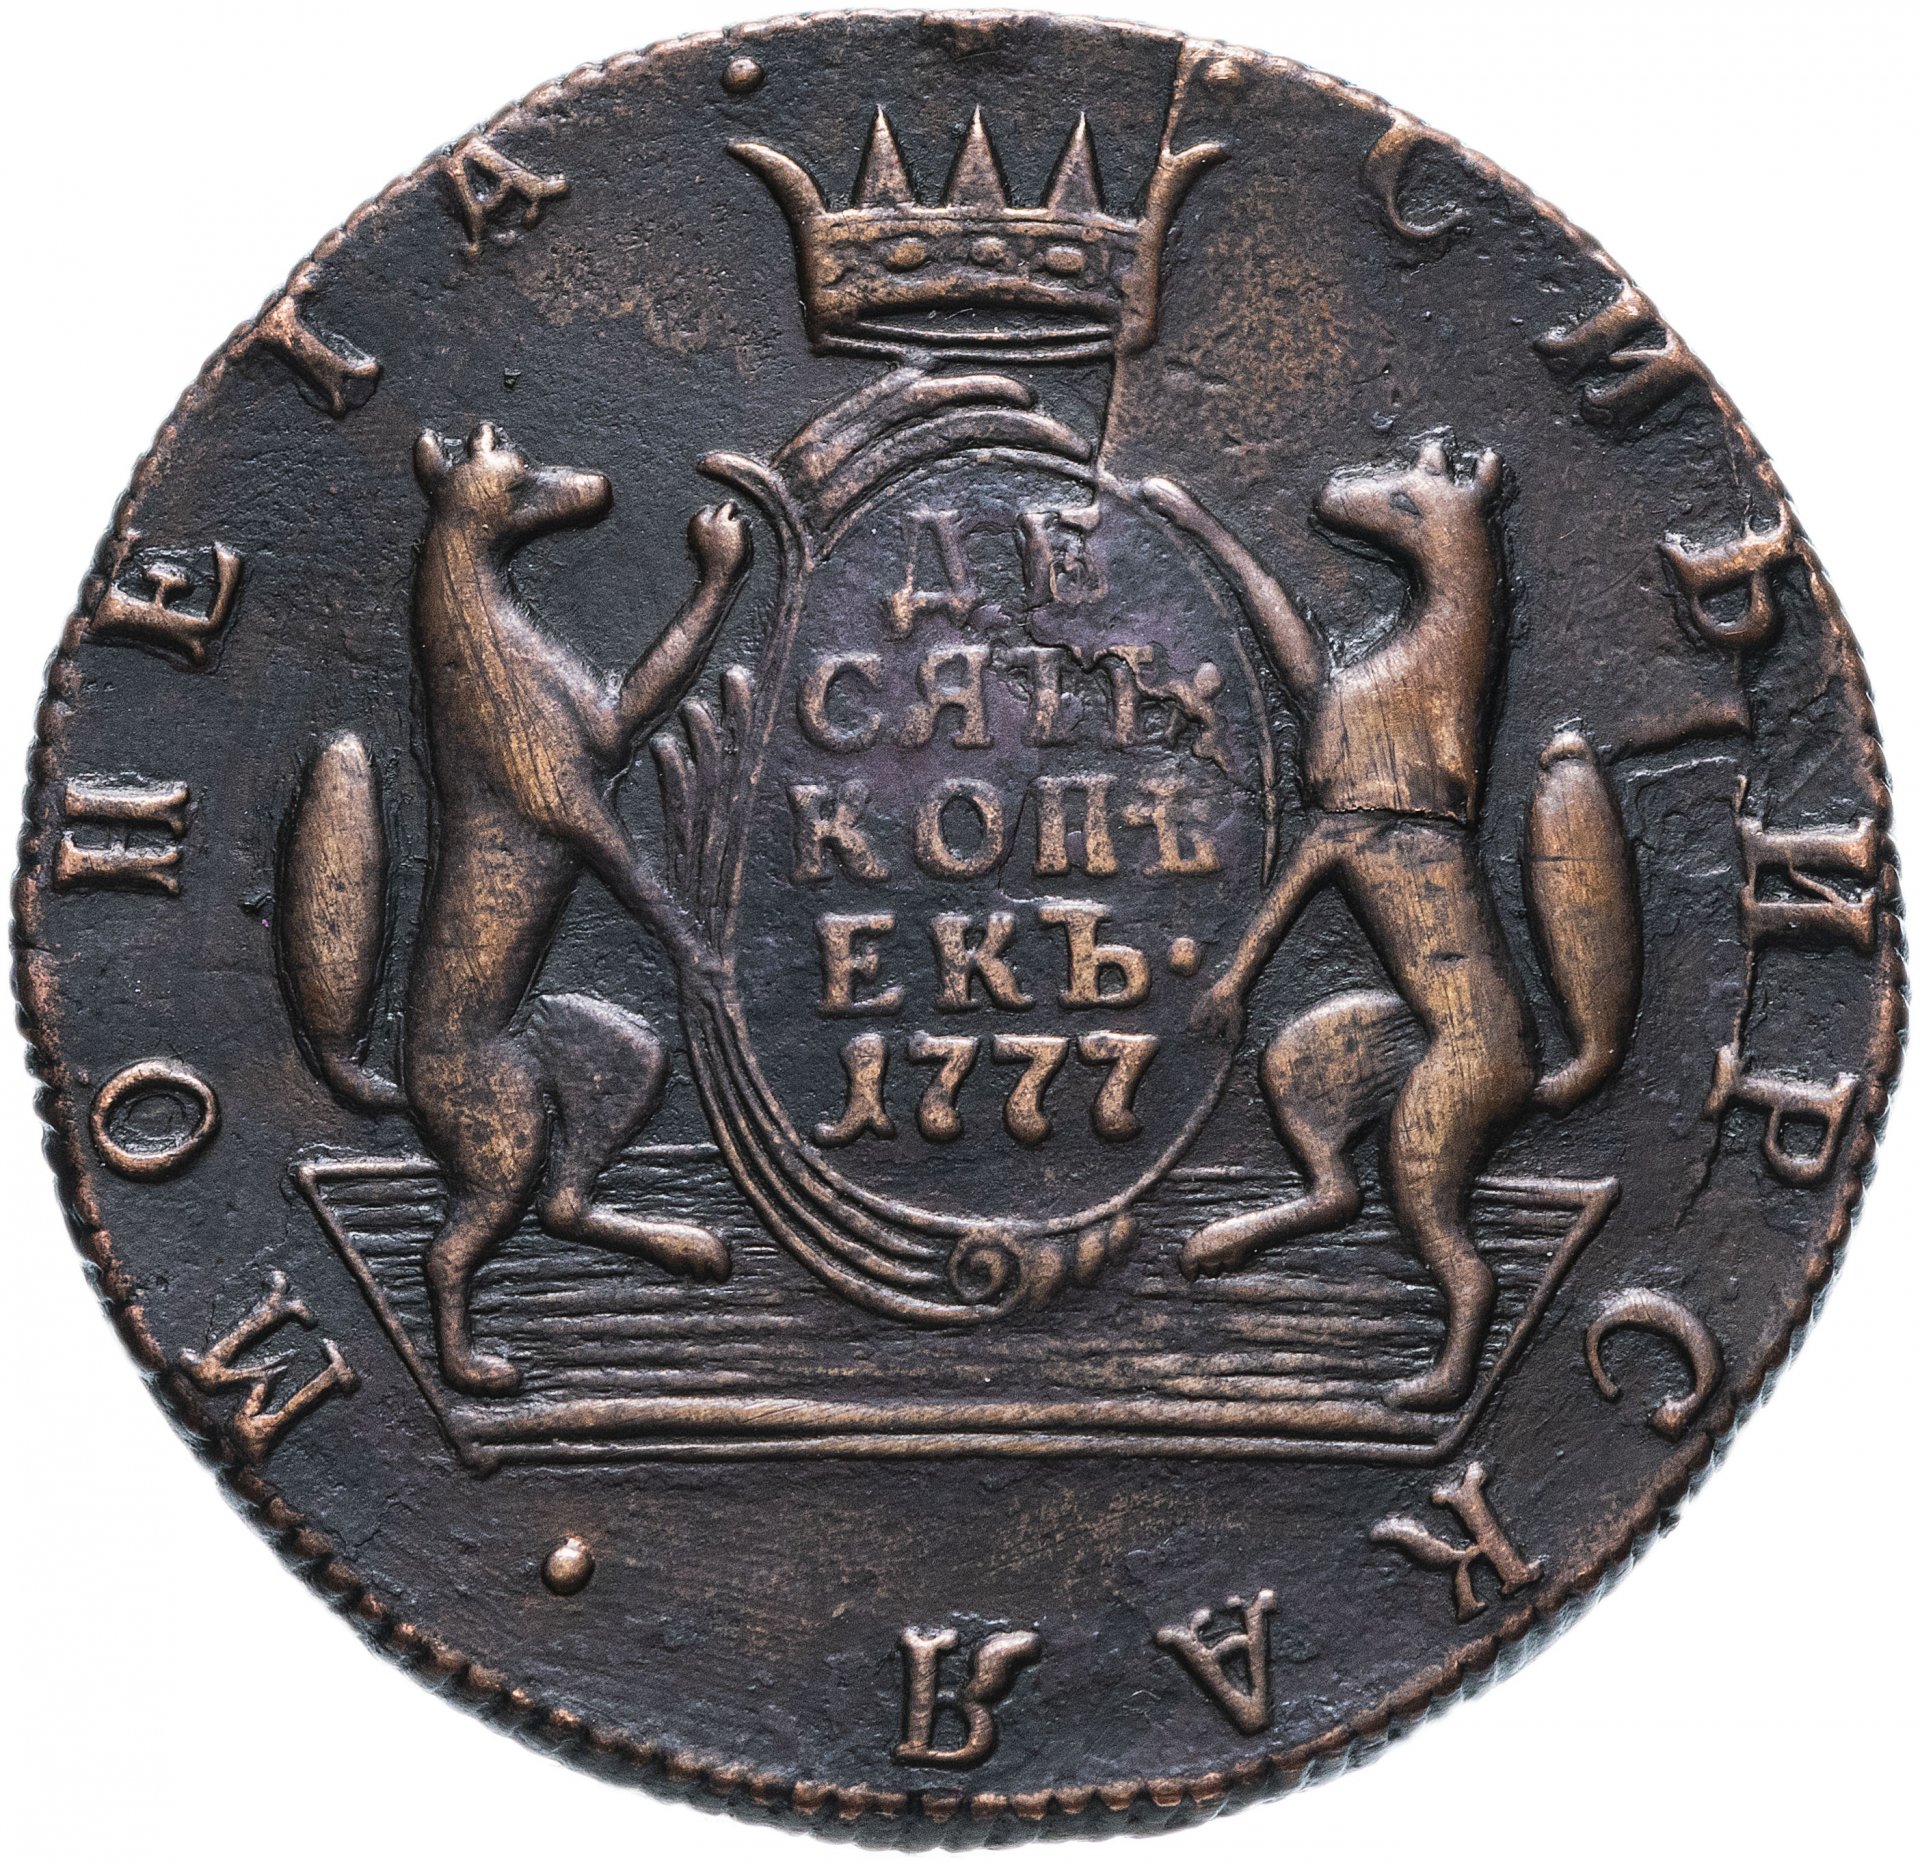 Купить монеты сибири. Монета 1777 10 копеек Сибирская. 10 Копеек Сибирь 1777. 2 Копейки 1777 года Сибирская монета. Копейка 1777.